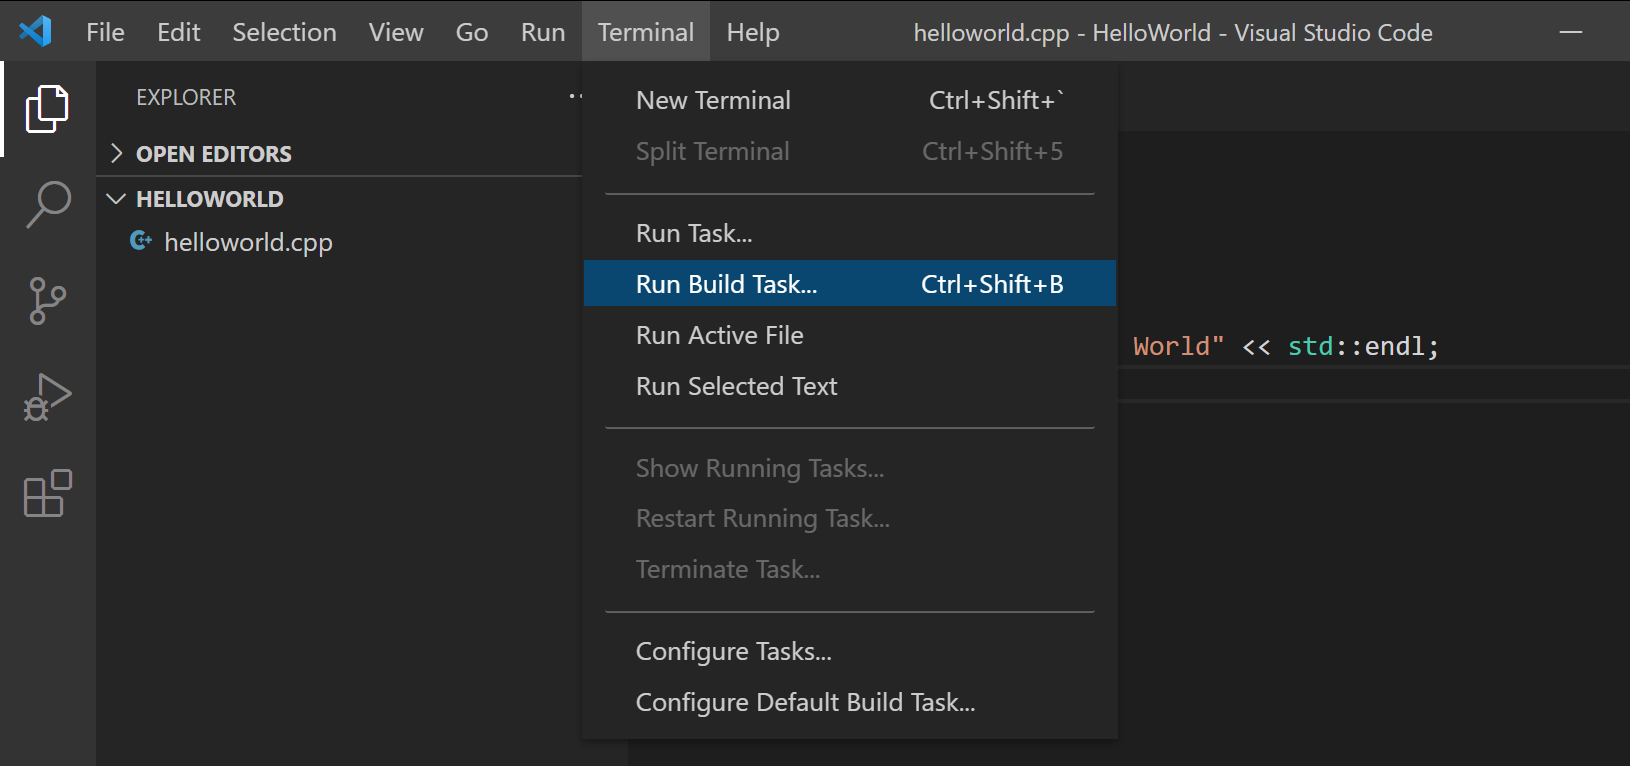 Run Build Task menu option